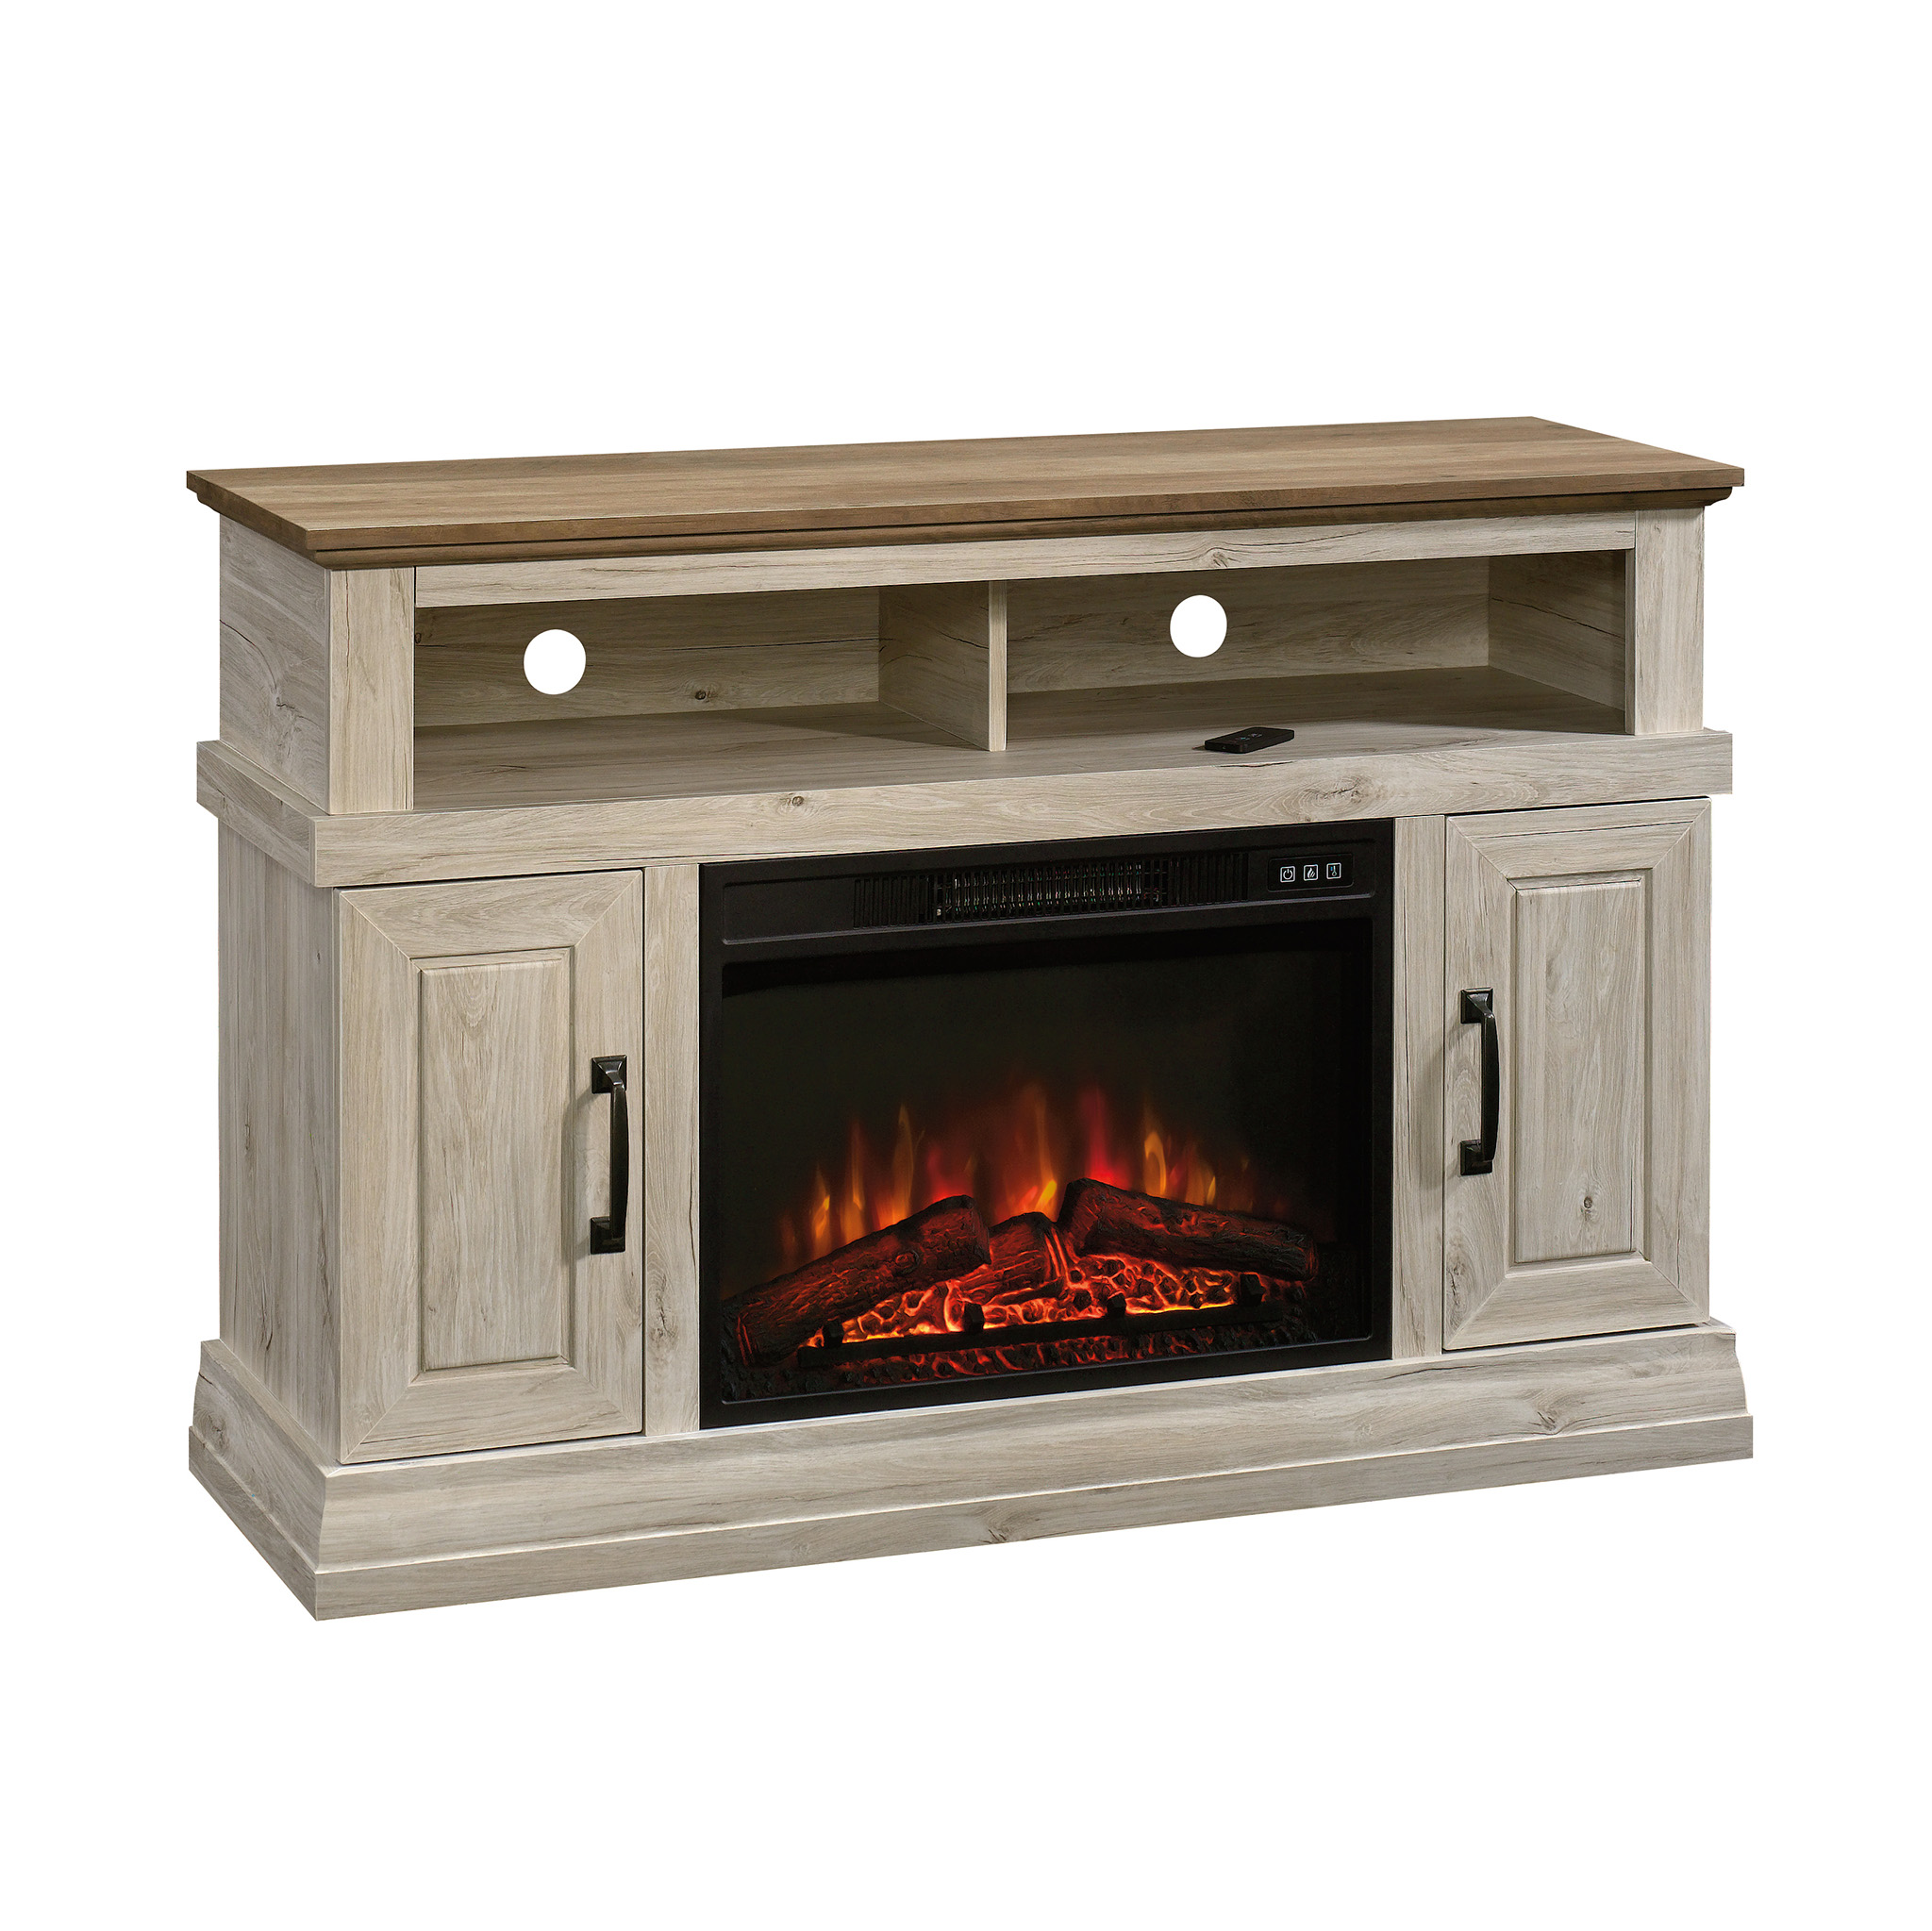 Sauder Select Media Fireplace, Chalk Oak™ finish (# 426163)